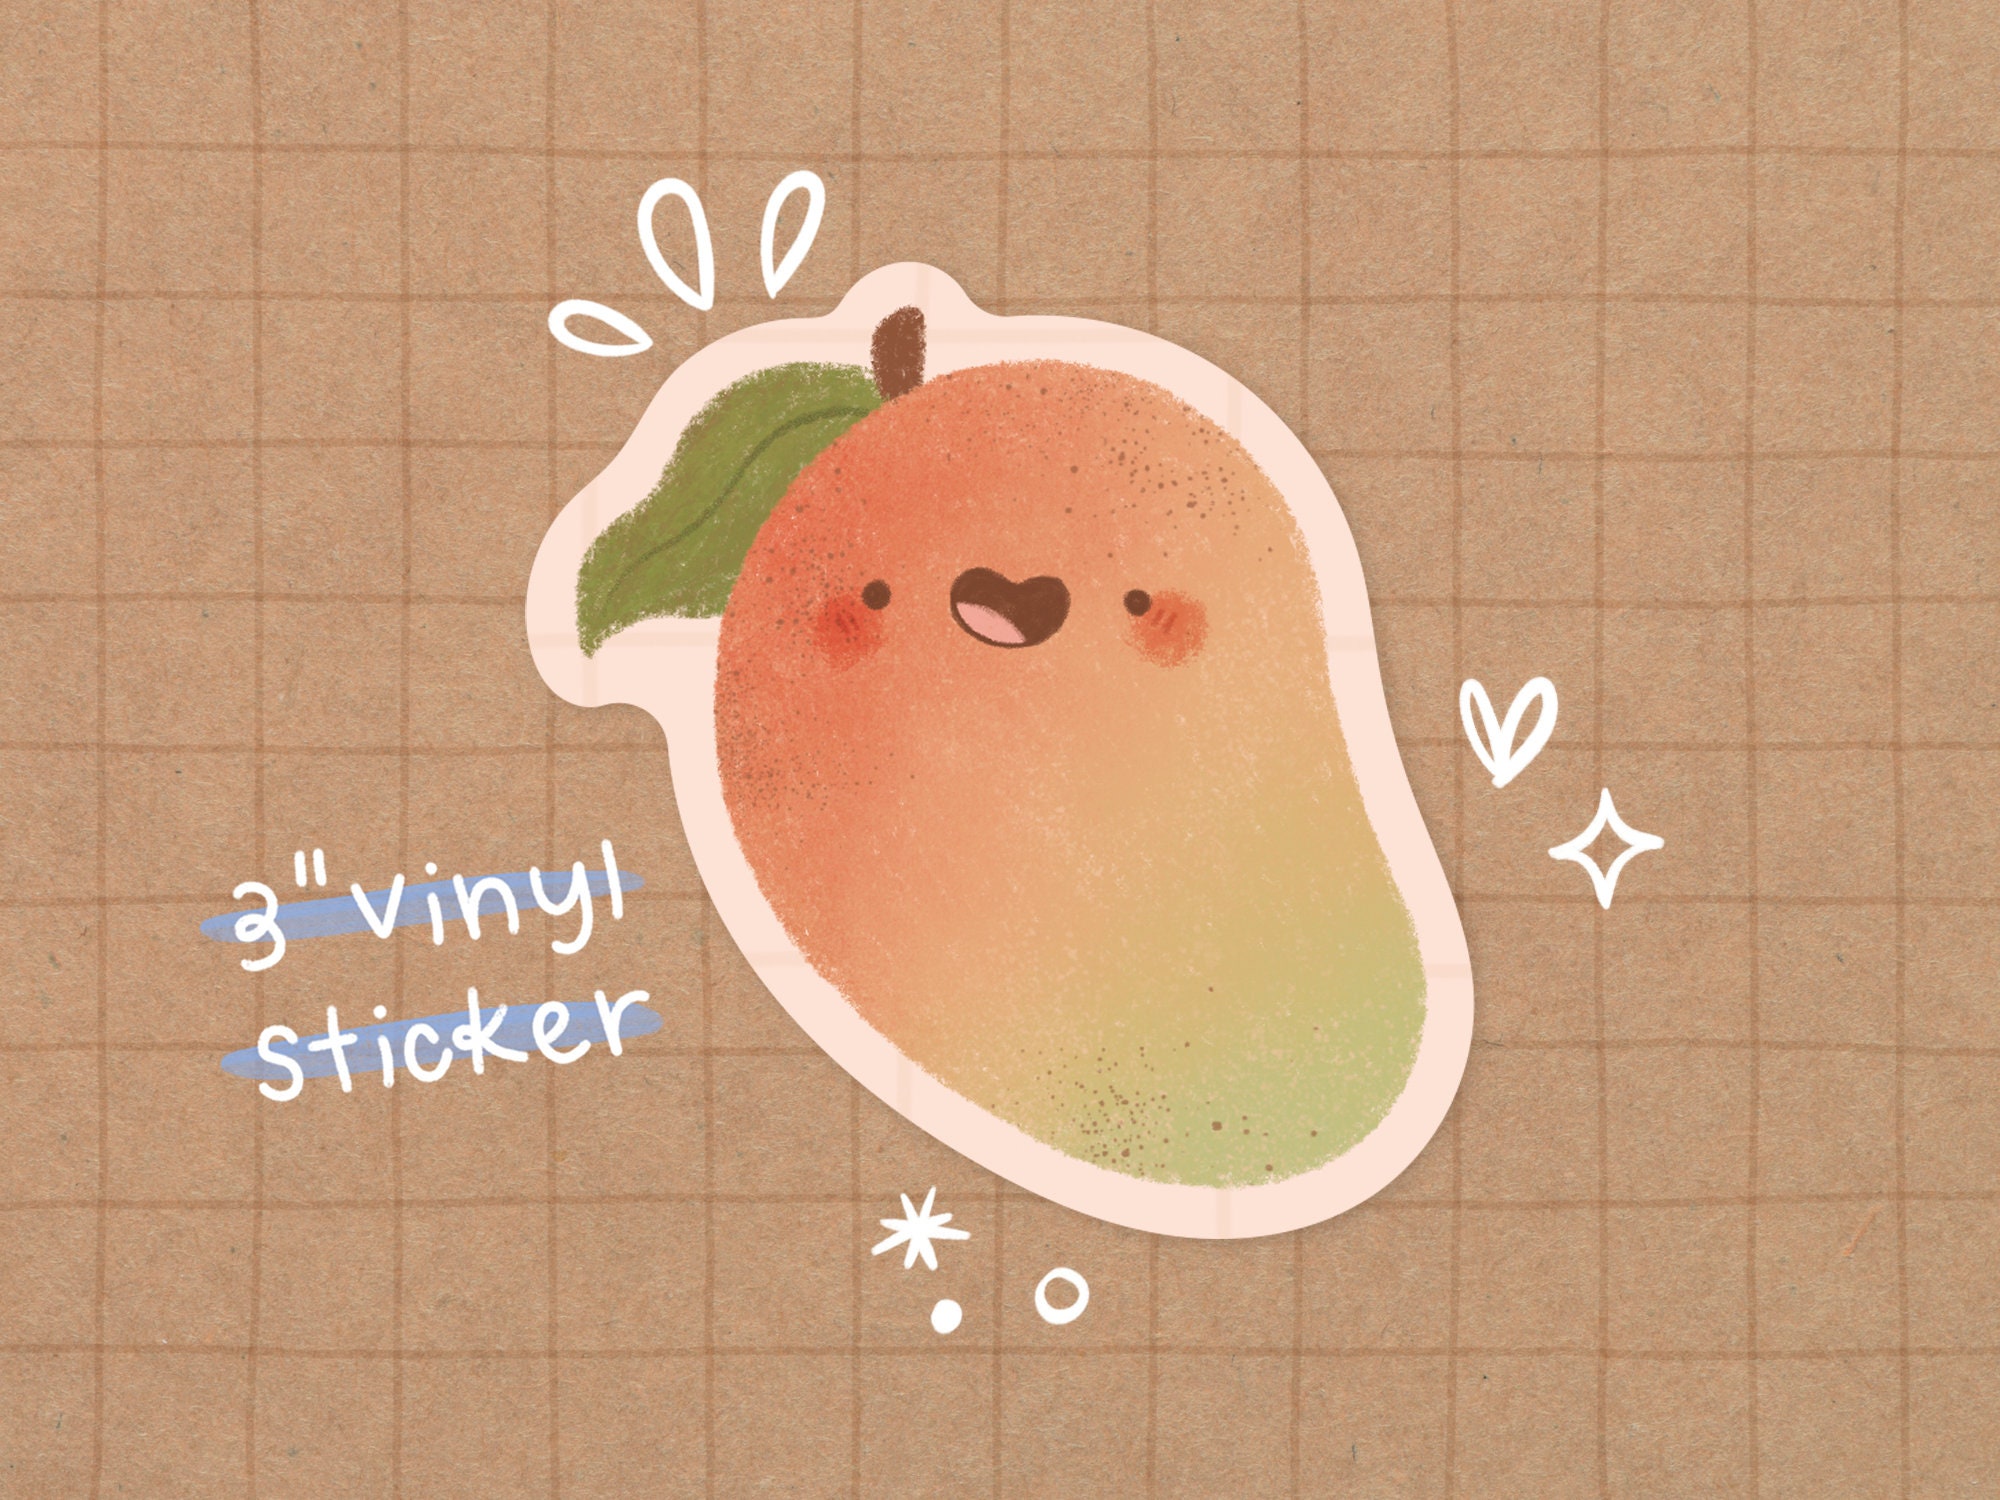 Kawaii Cute Fruits Sticker Image, in the Style of Kawaii Art, Meme